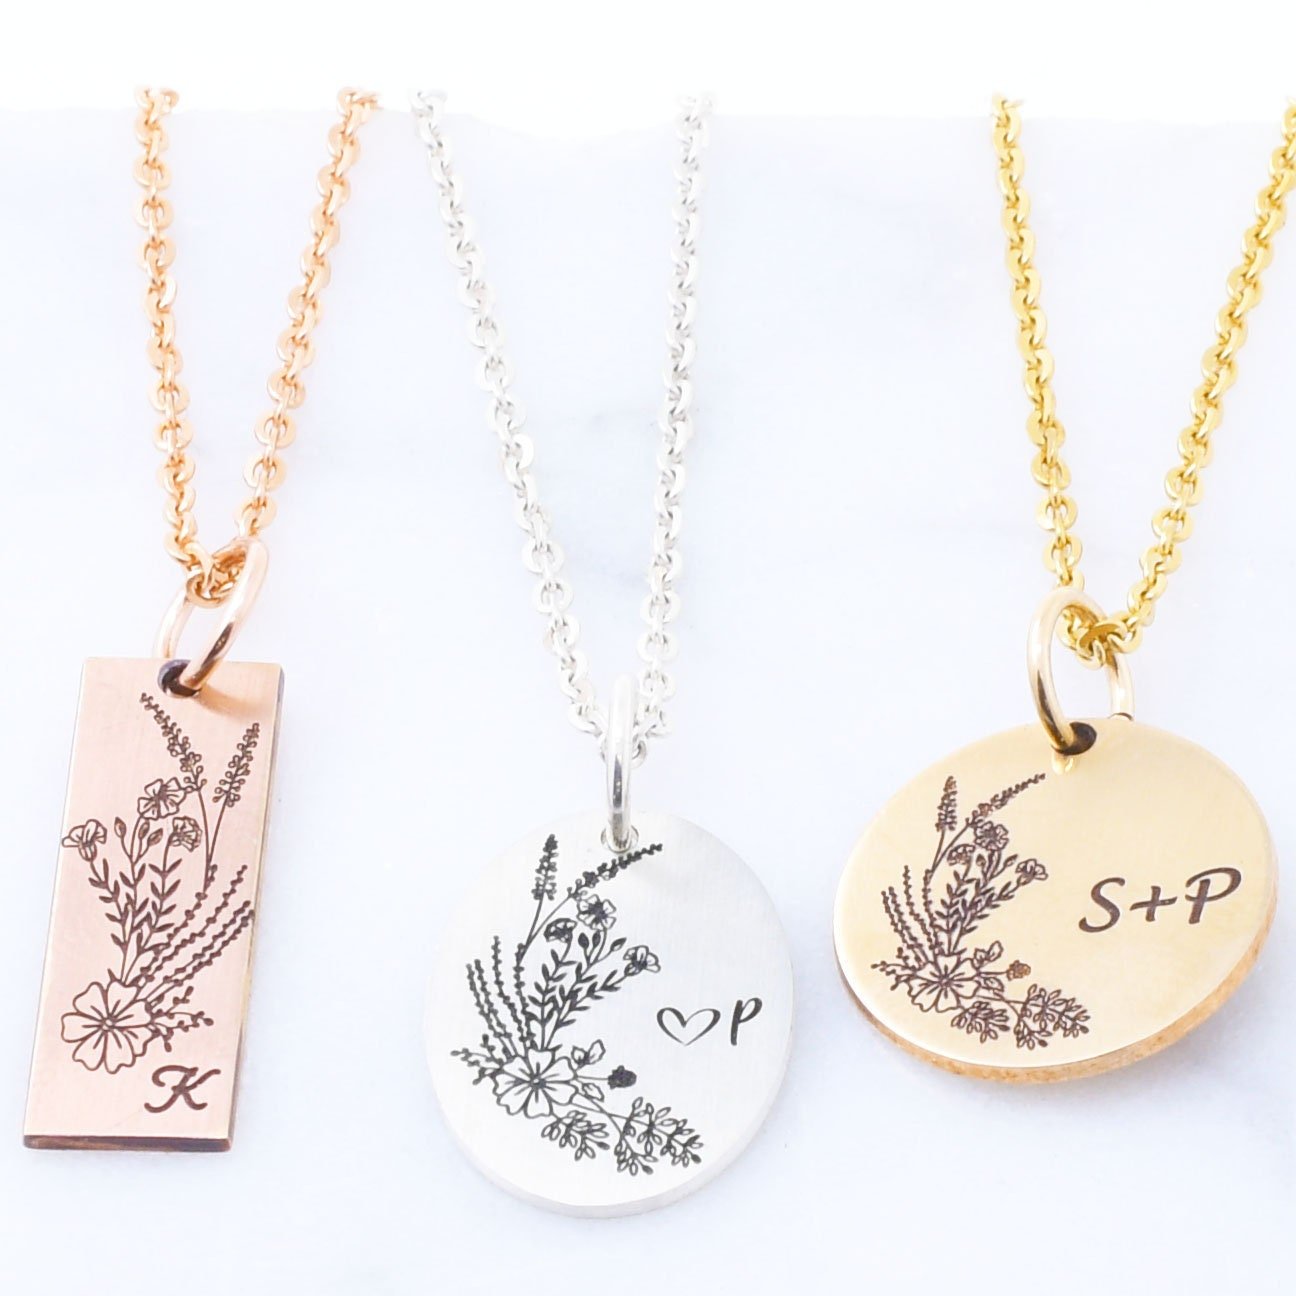 Wildflowers Necklace - Custom Engraving